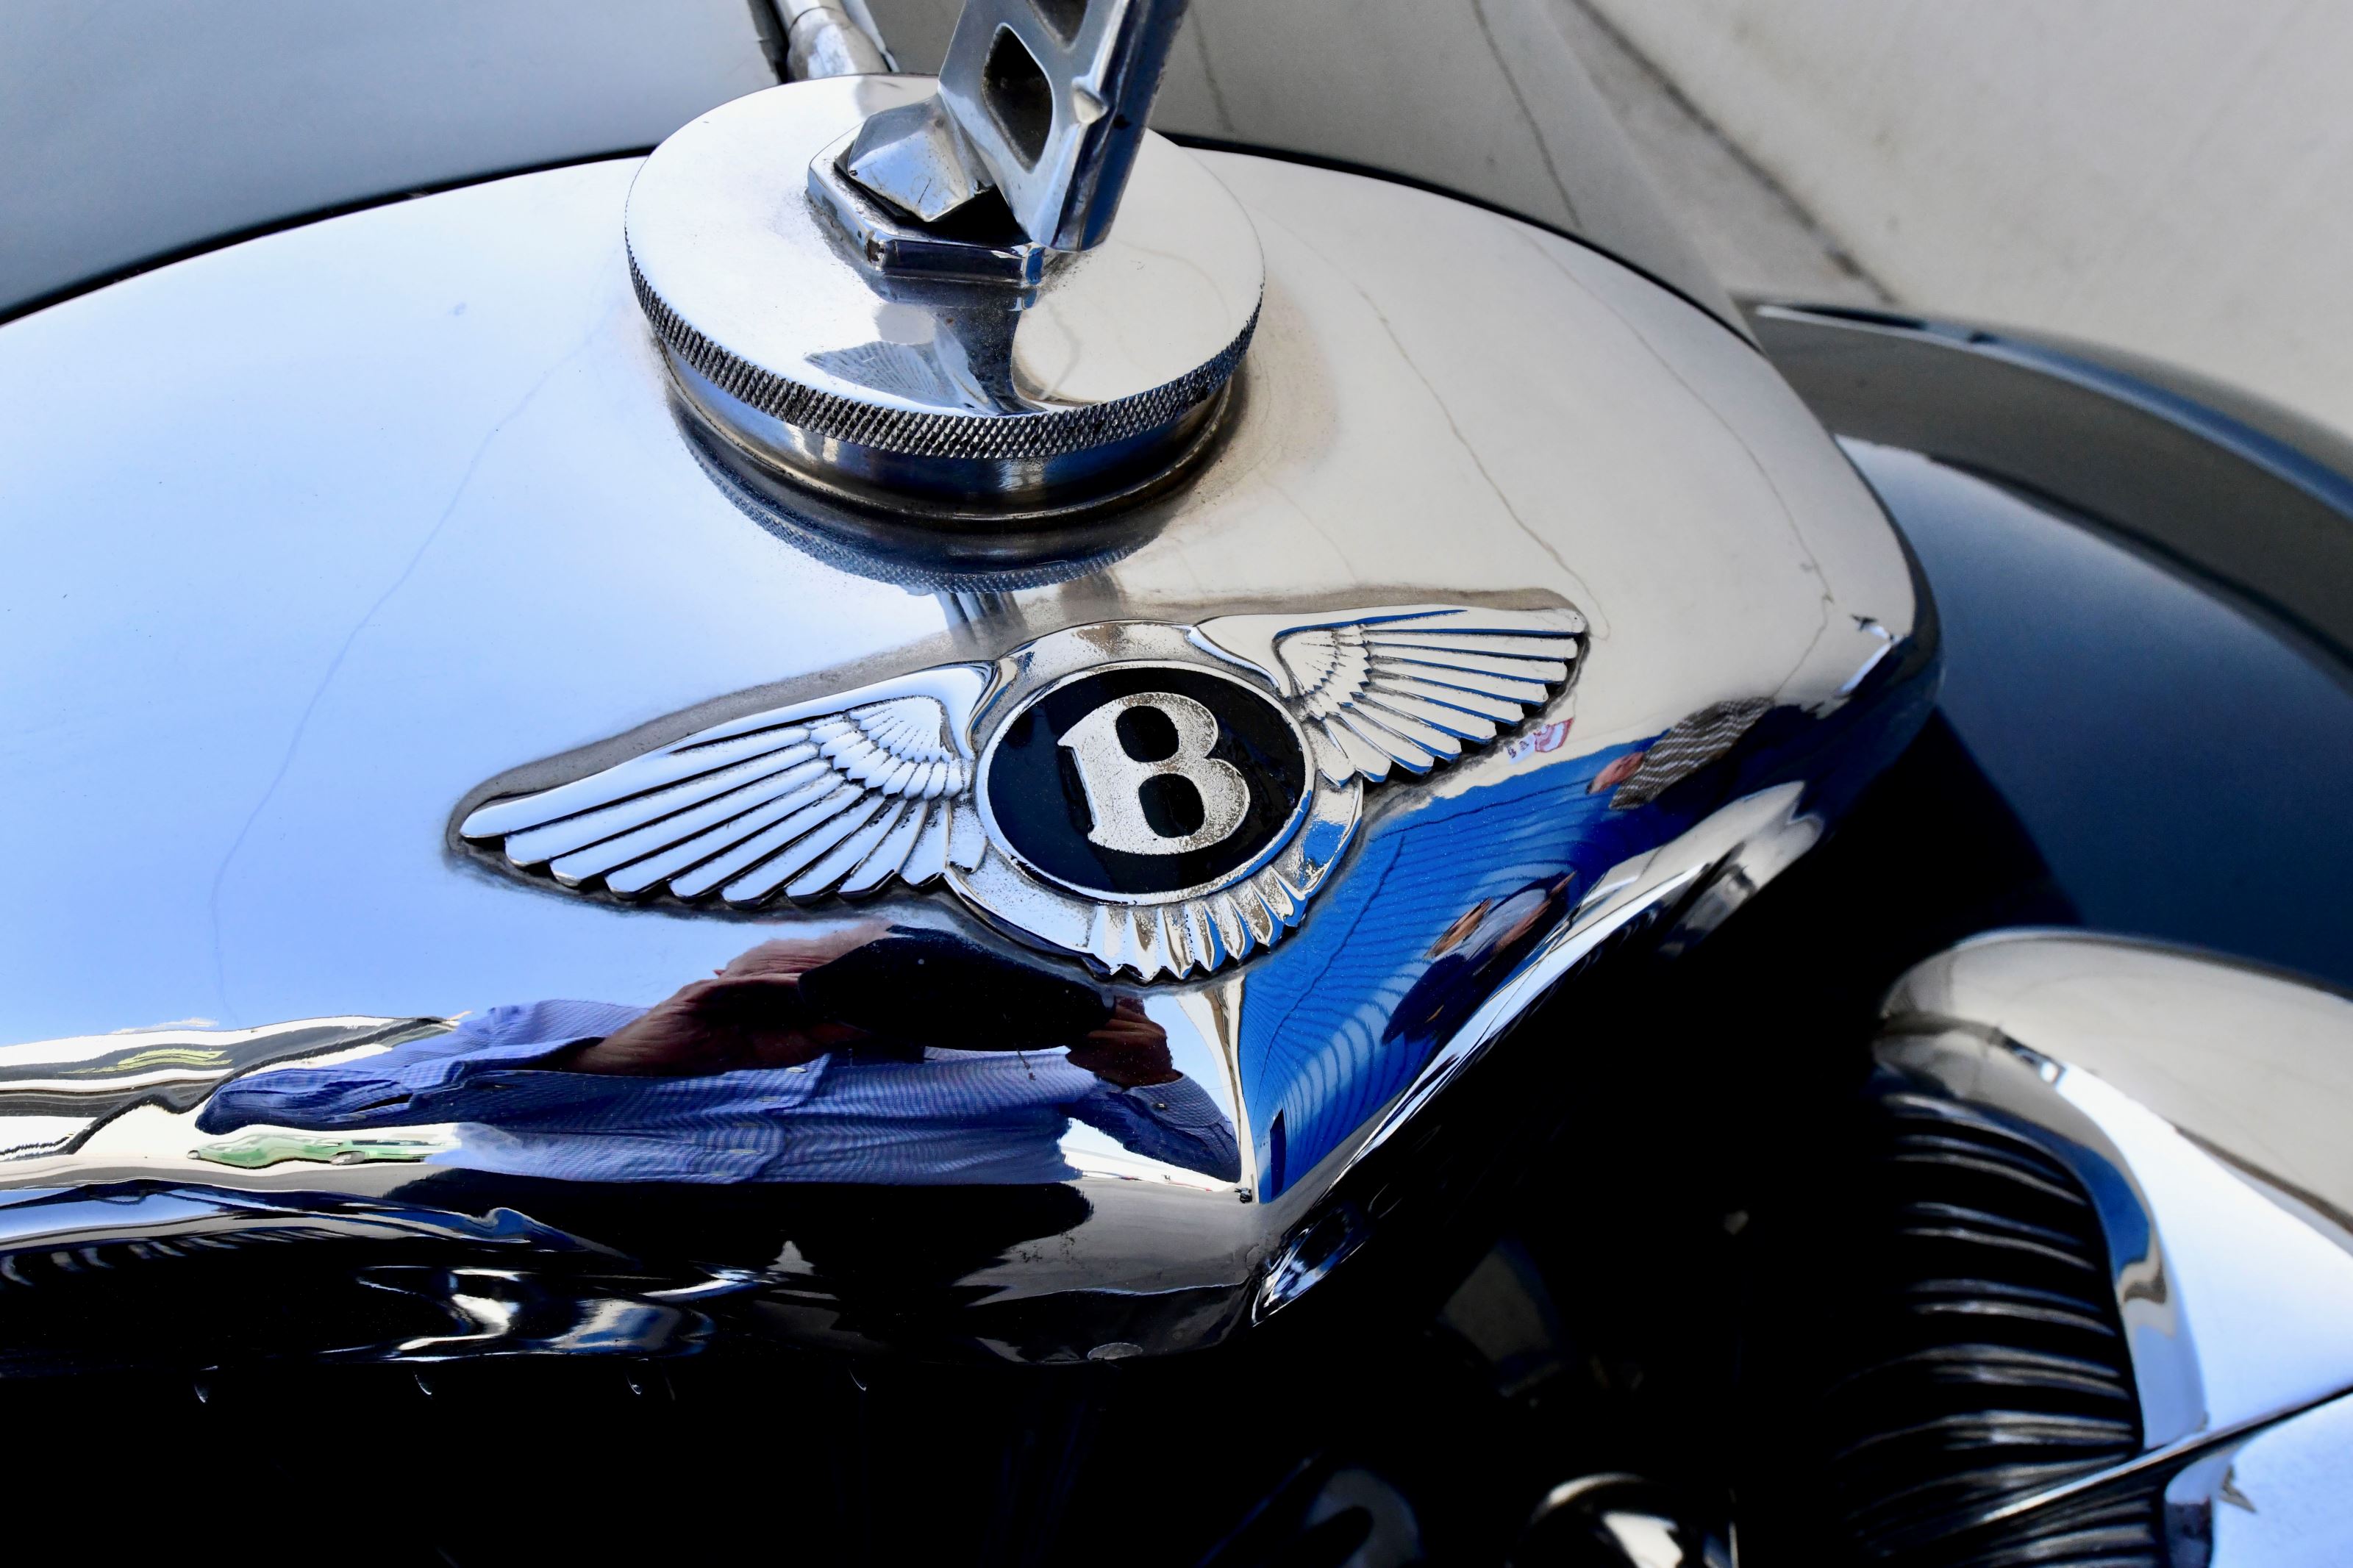 Bentley derby 3.5 litre barker style sedanca coupe xn8vohdbcrqwah9kowtg7